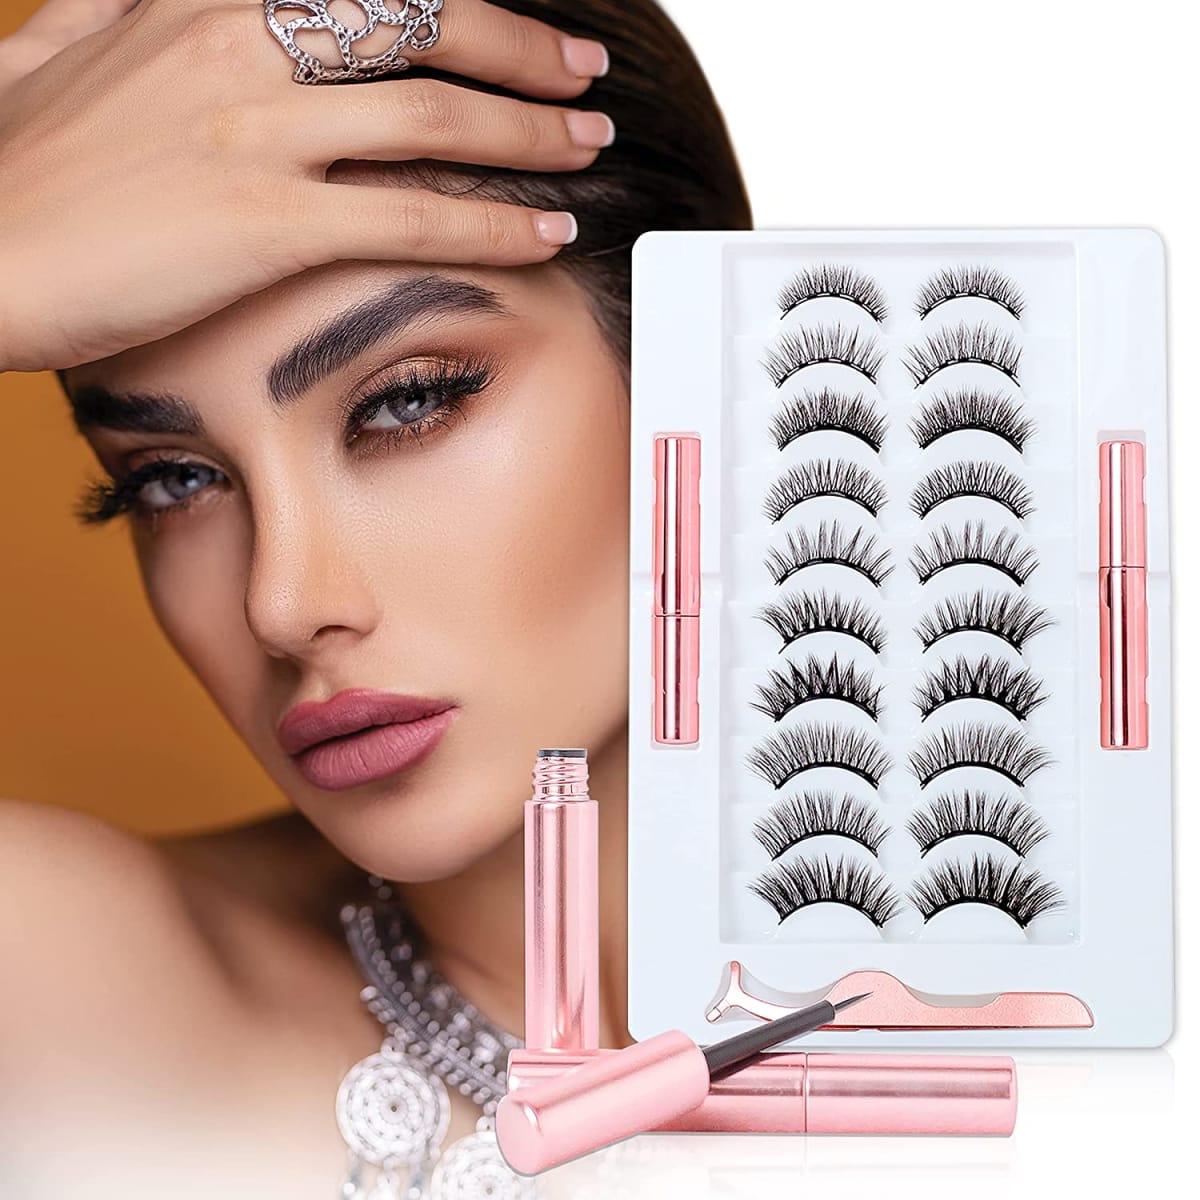 Magnetic Eyelashes with Tweezers and Waterproof Eyeliner